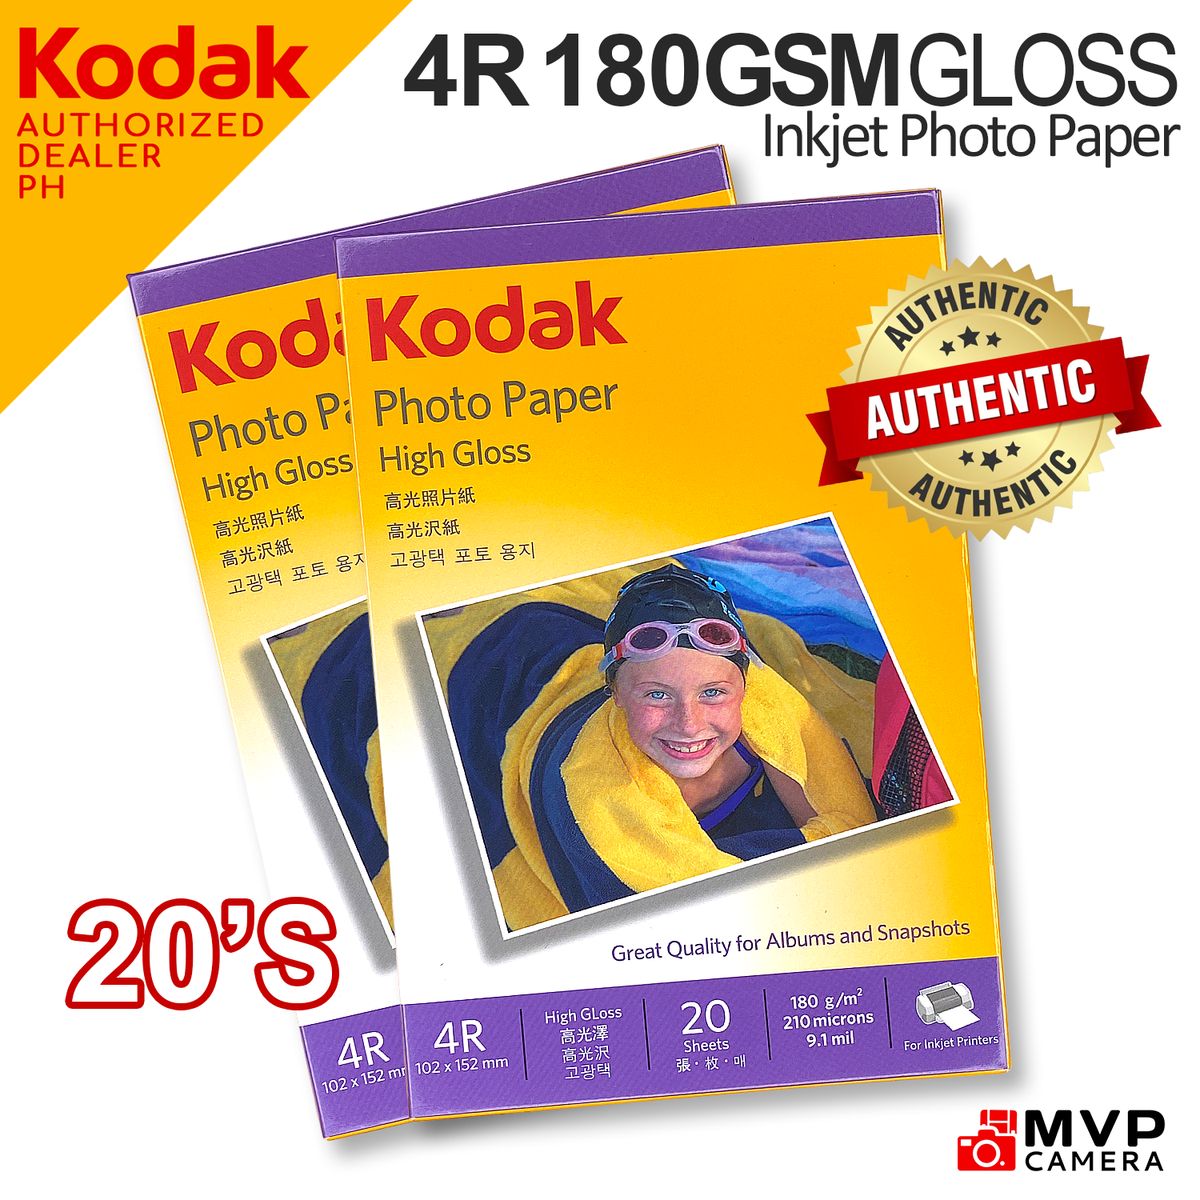 Kodak Photo Paper 4R 180gsm 100s